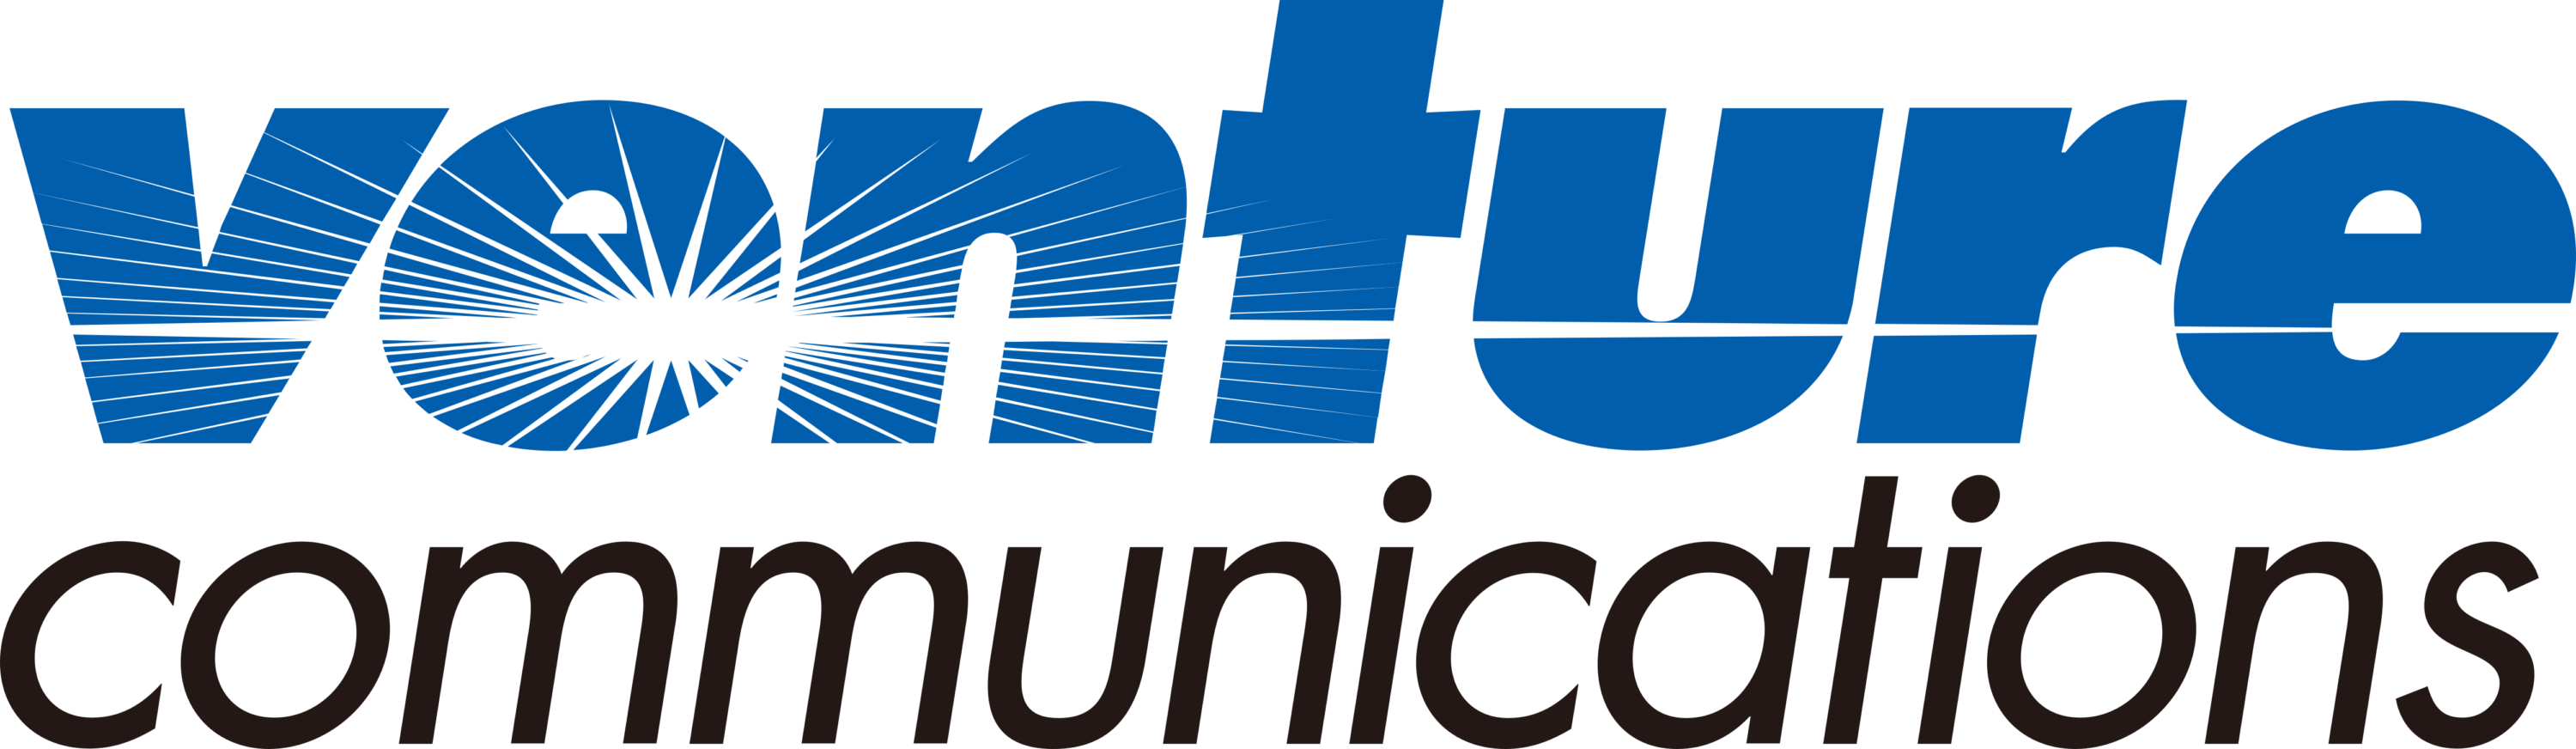 Venture Communications Logo